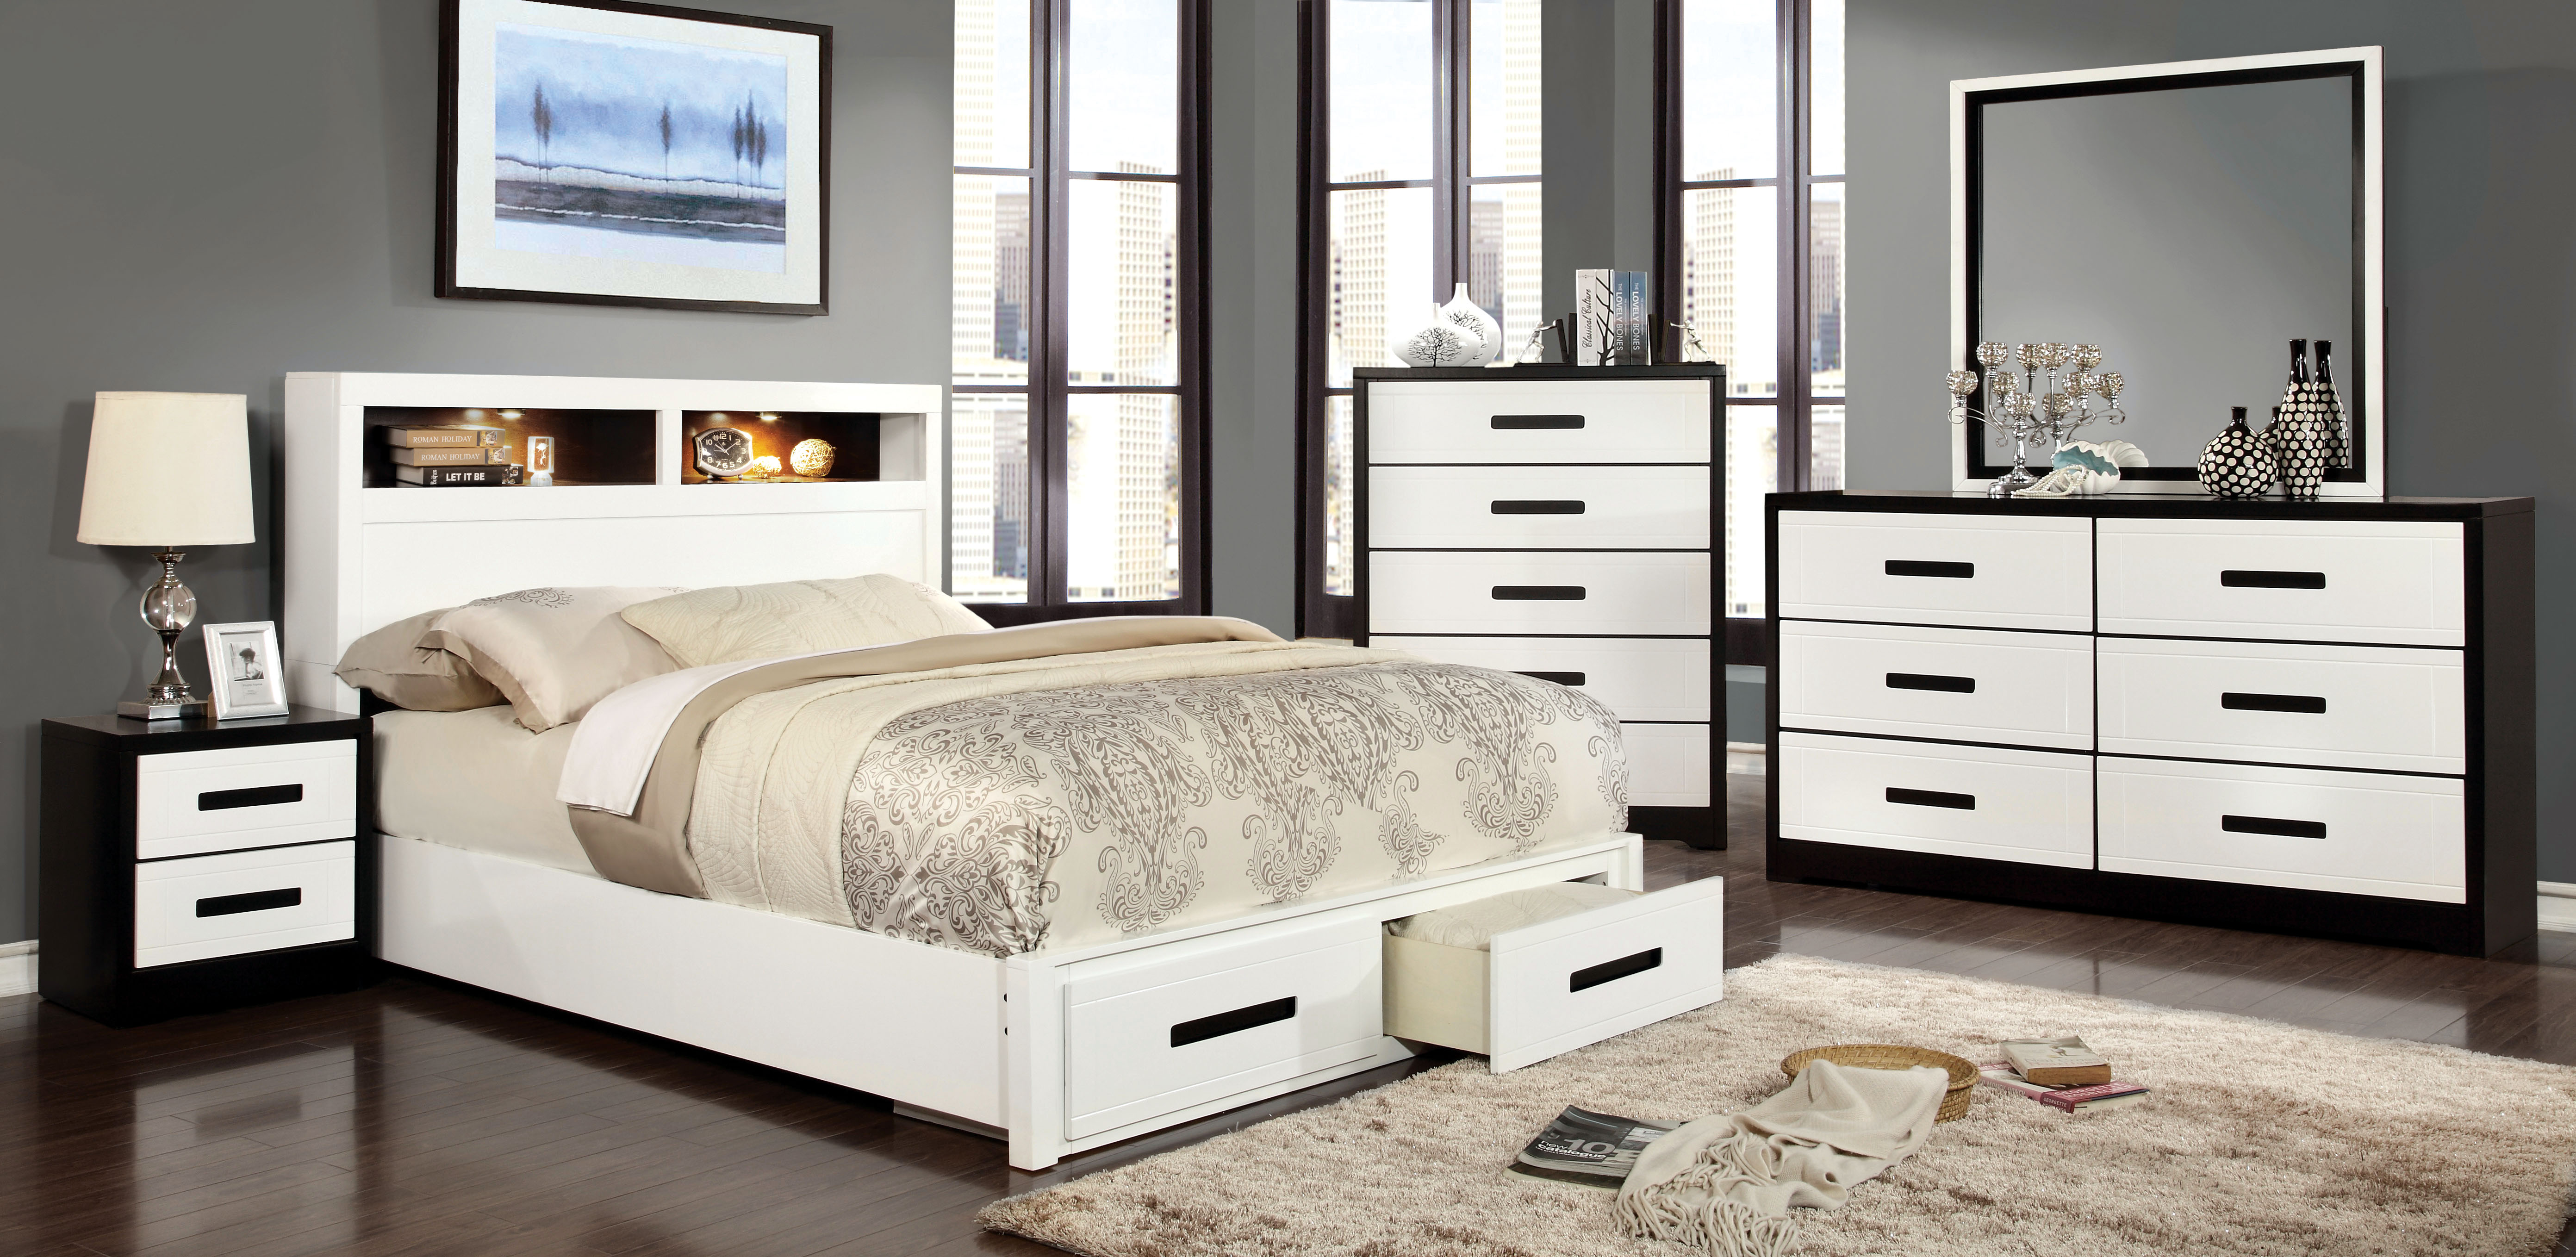 Furniture of America Two-Tone Maxus Storage Bed with Bookshelf Headboard